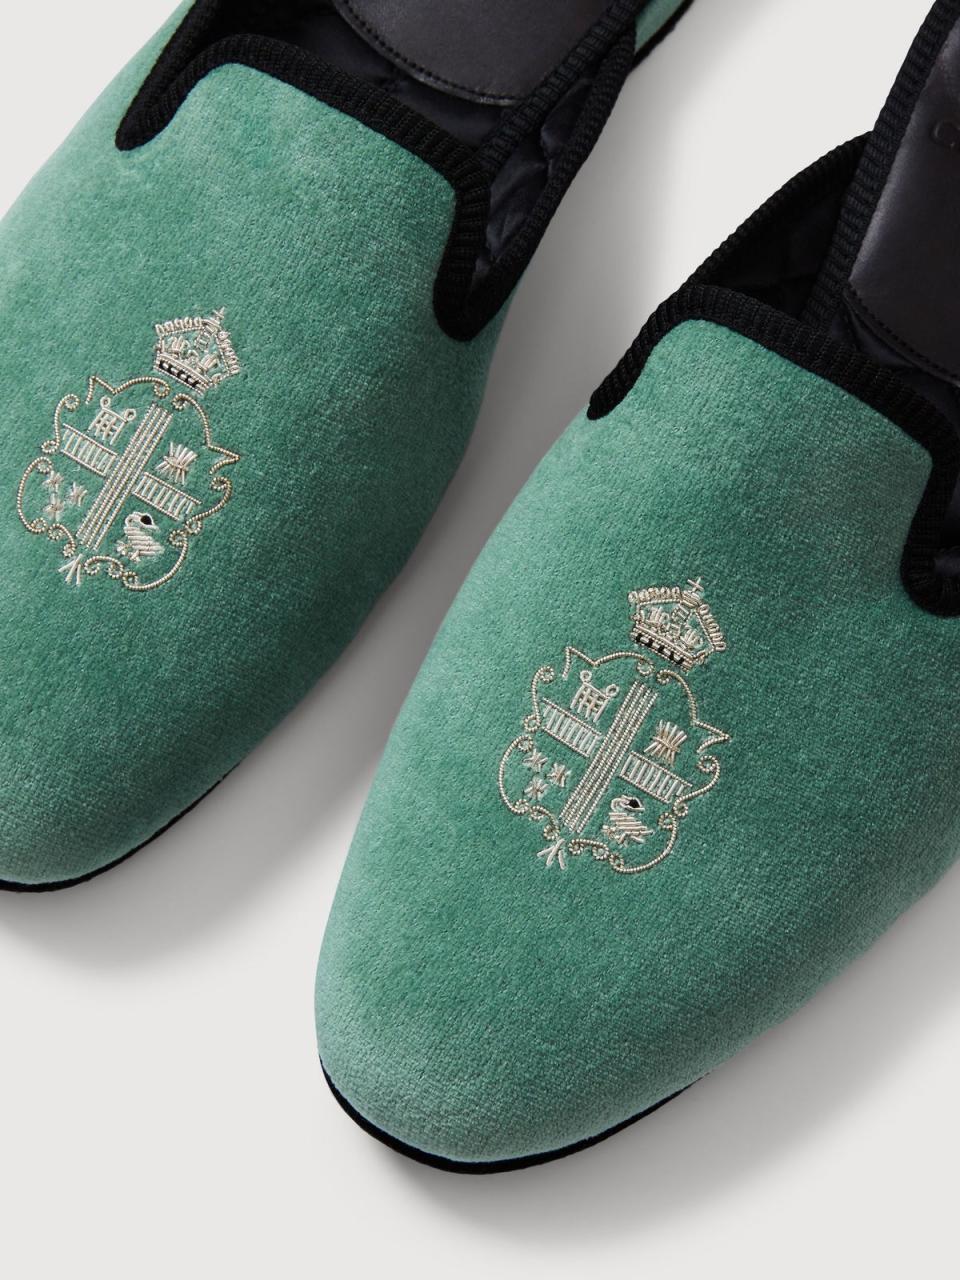 Claridge's slippers in their trademark jade colour palette (Claridge's)